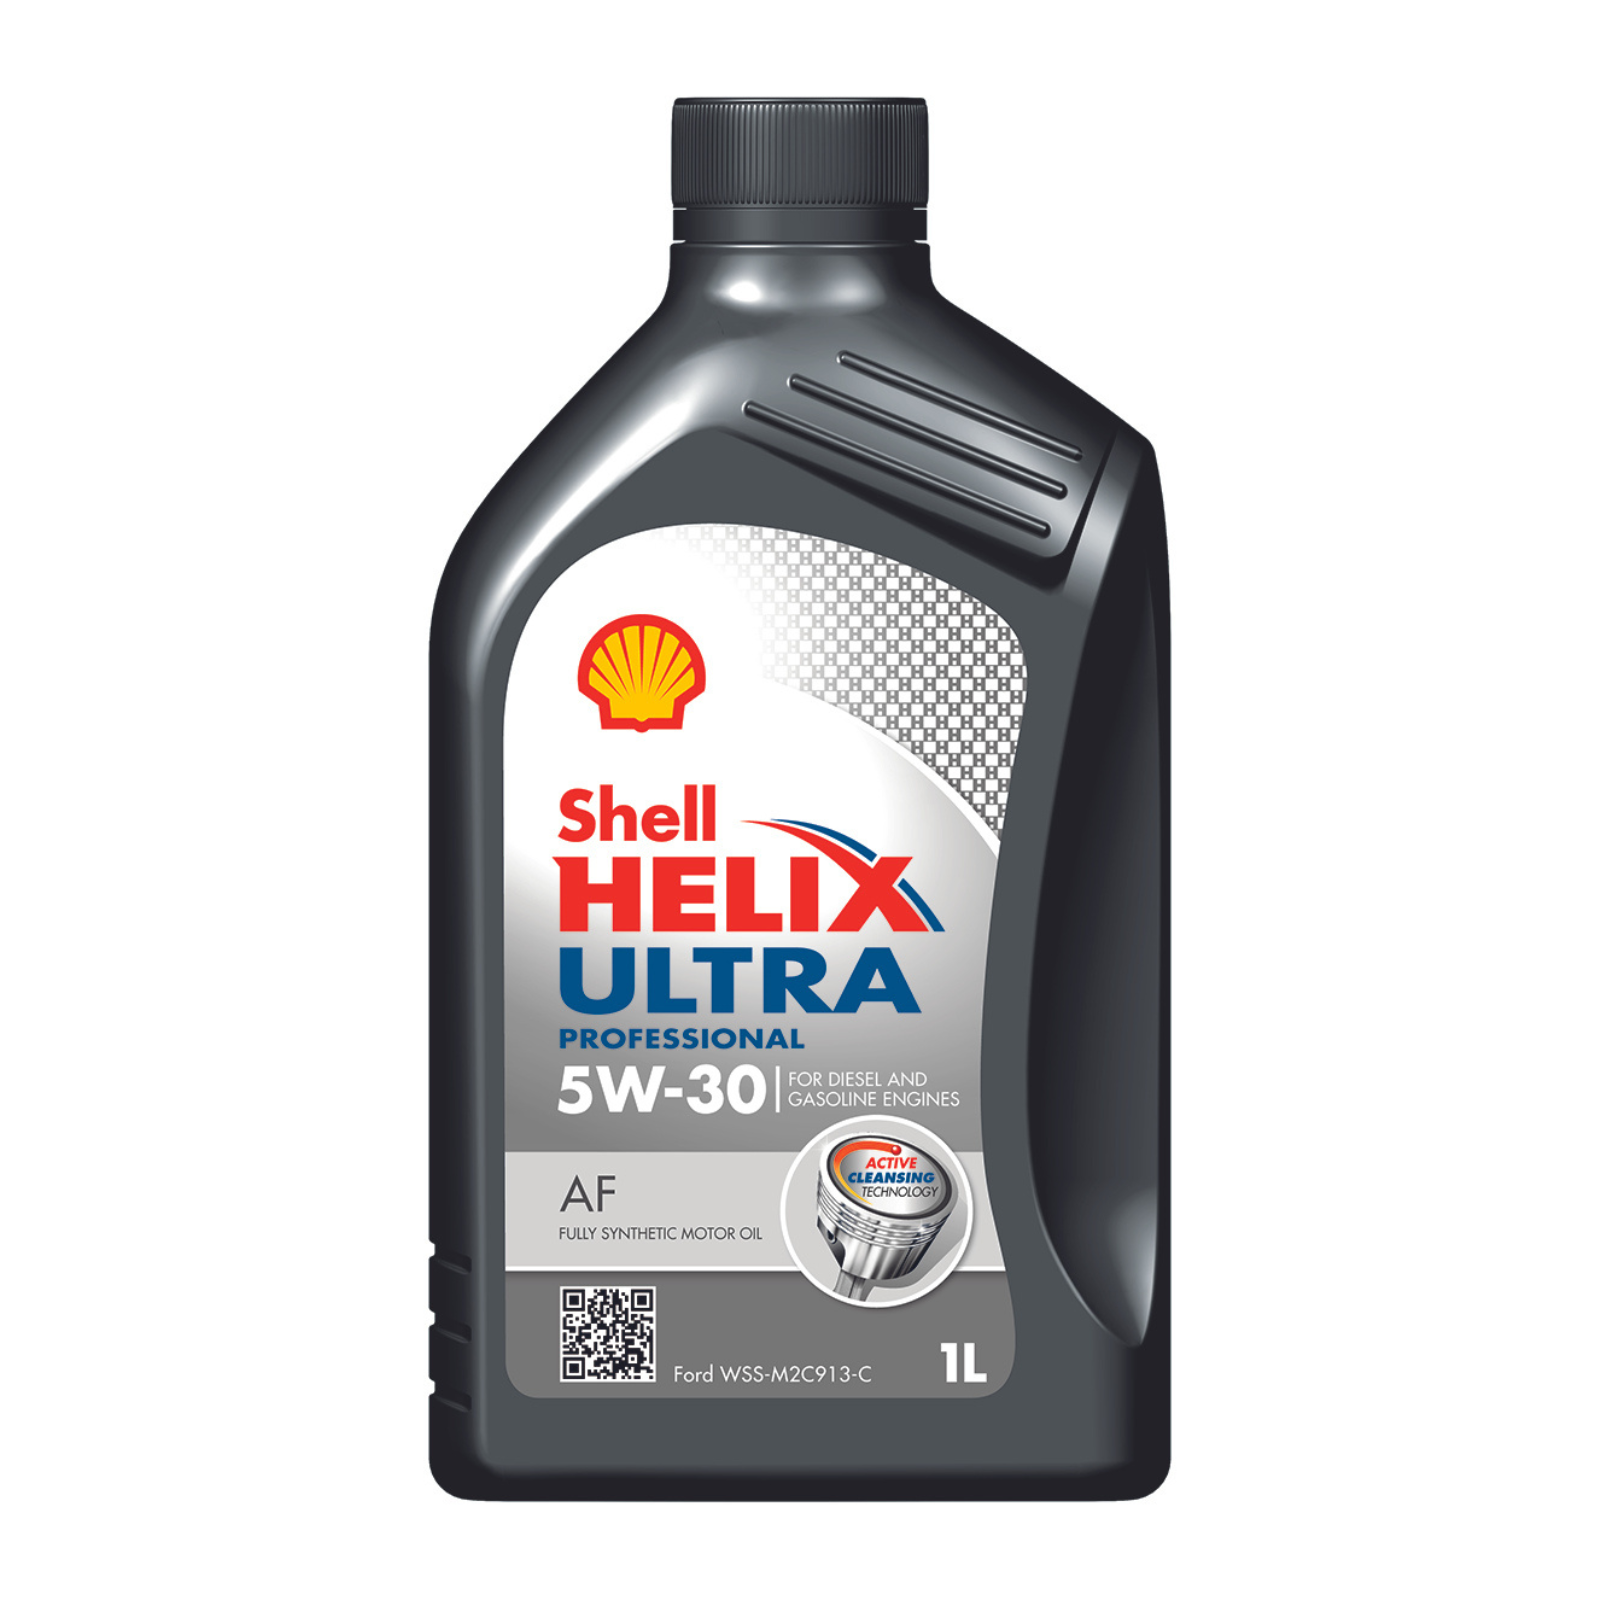 Shell Helix Ultra Professional AF 5W-30 1L Engine Oil